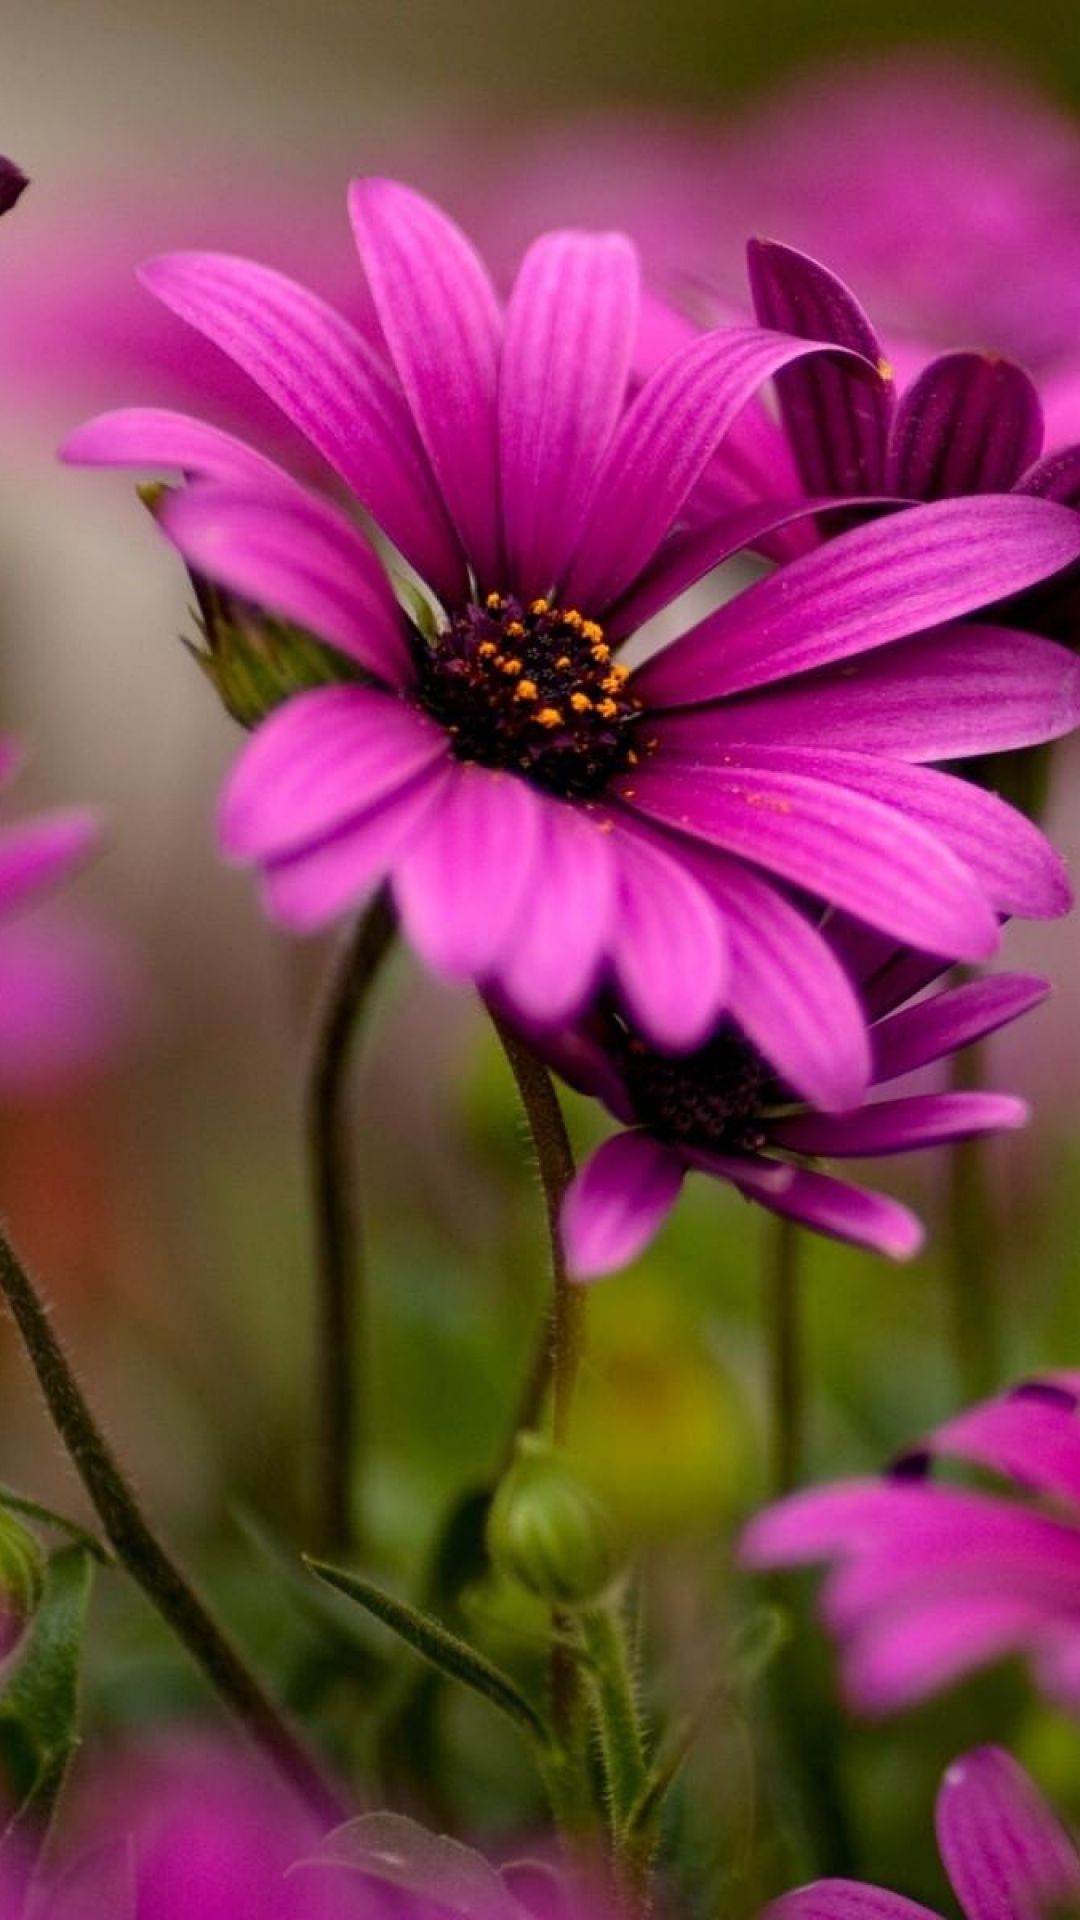 Beautiful flowers | Incredible Art in Nature | Pinterest | Flowers ...